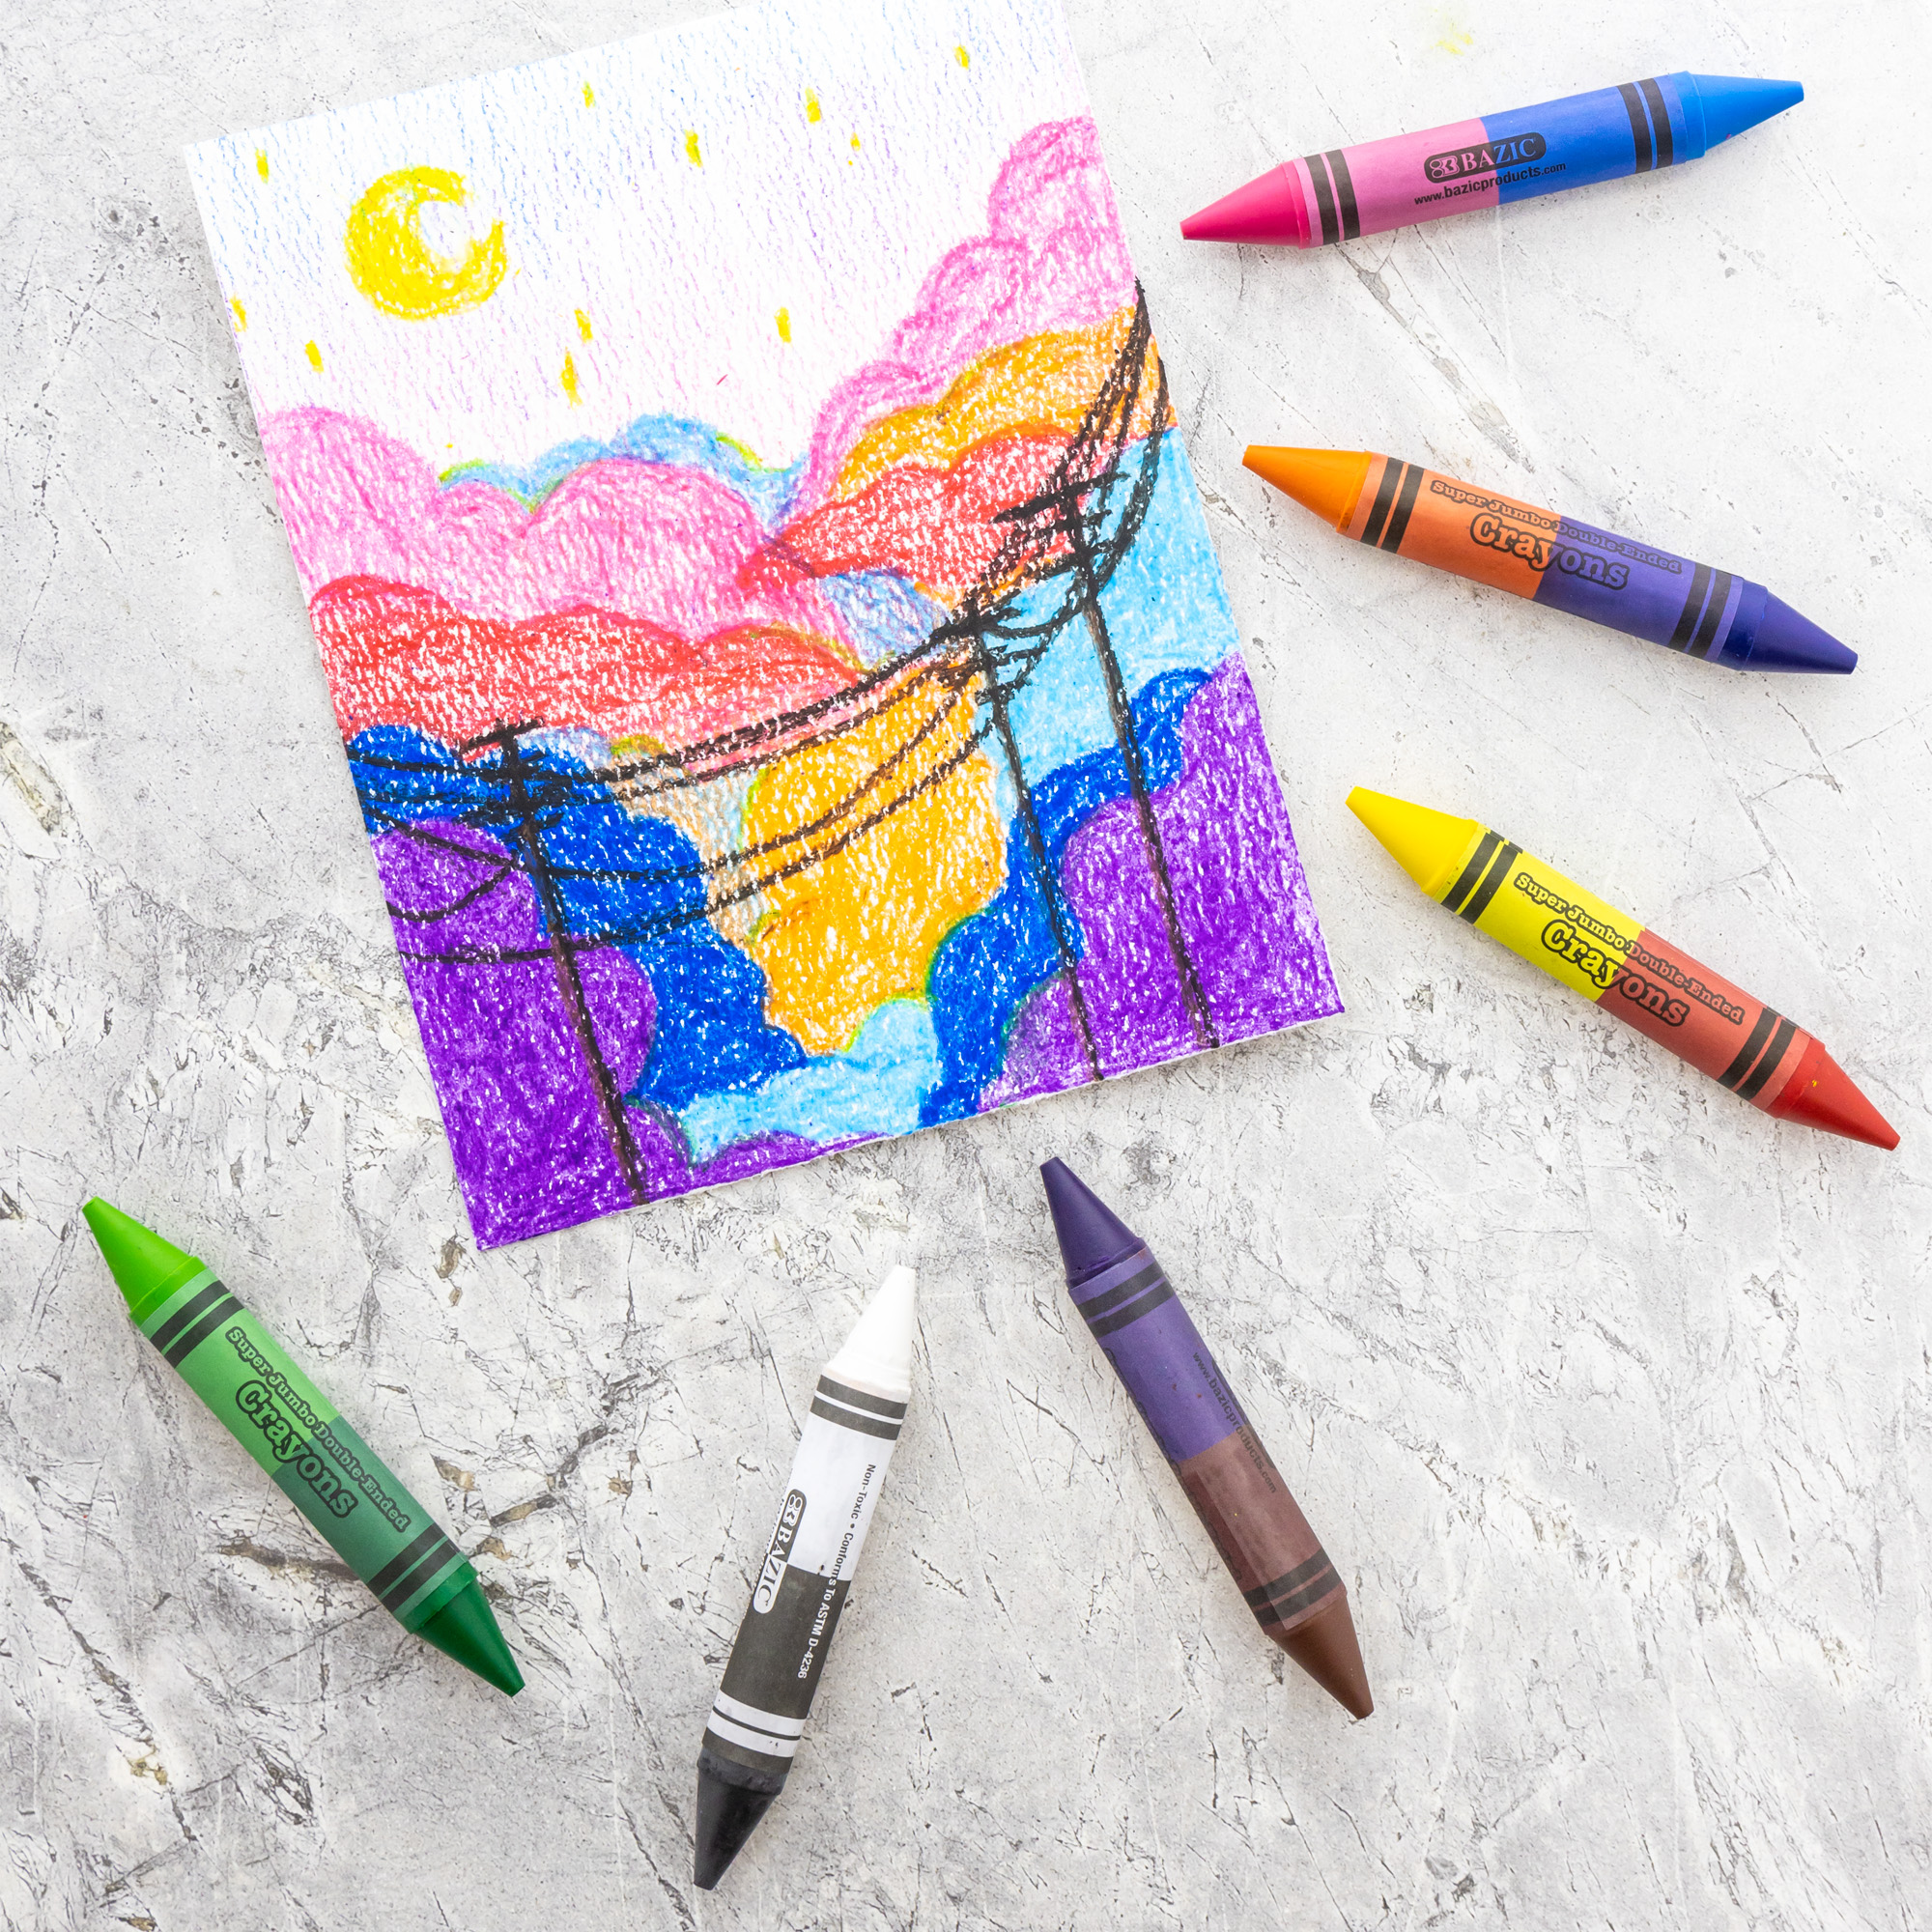   Basics Jumbo Crayons - 24 Assorted Colors, 2-Pack